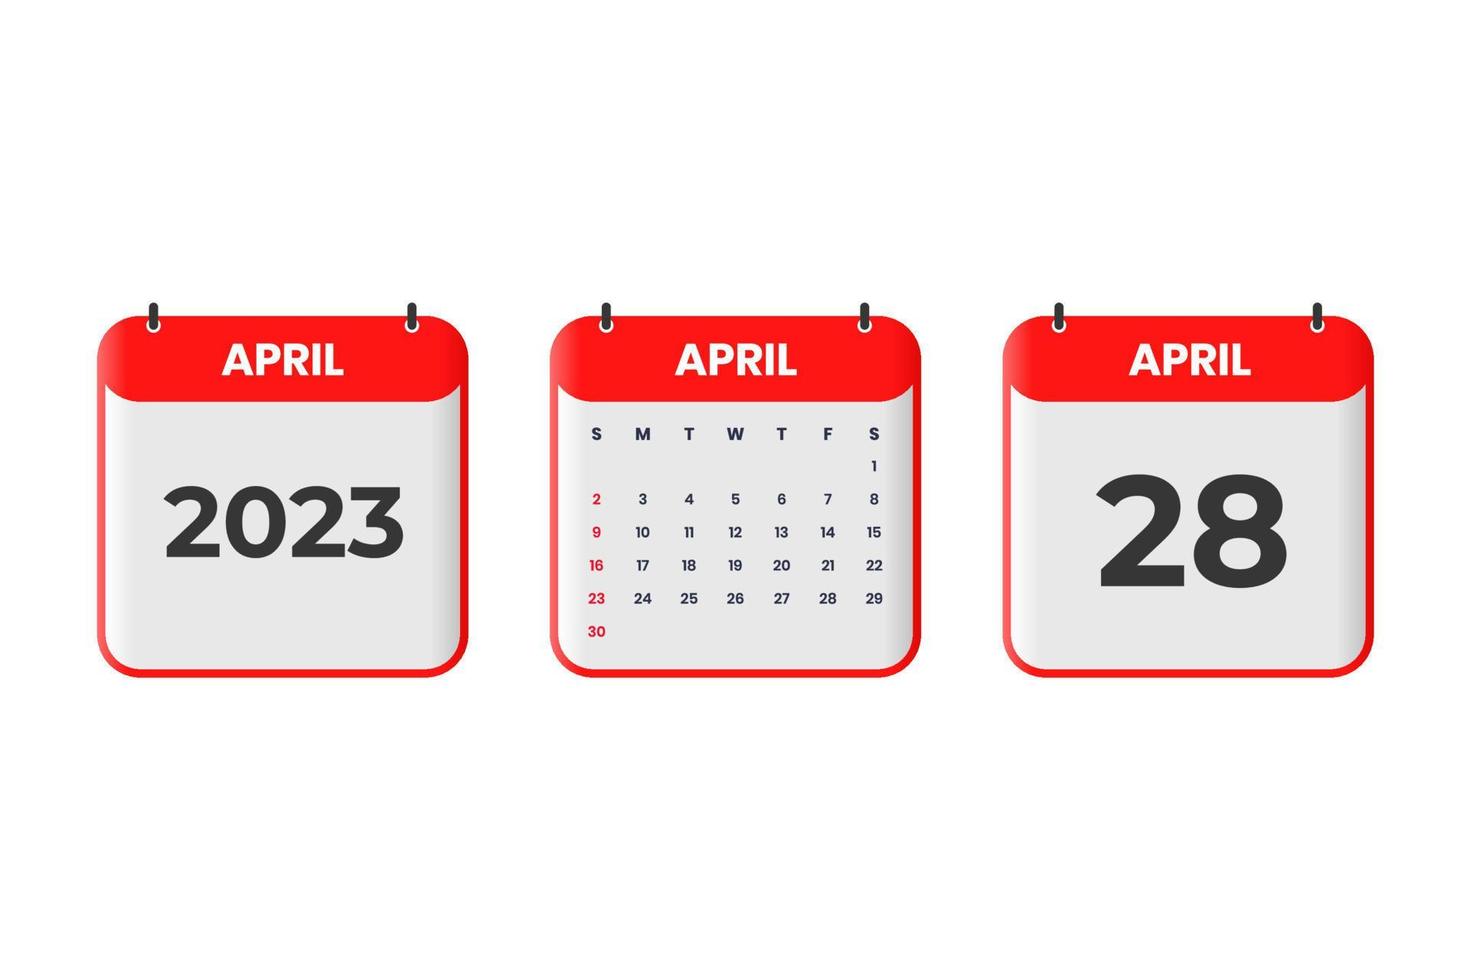 April 2023 calendar design. 28th April 2023 calendar icon for schedule, appointment, important date concept vector